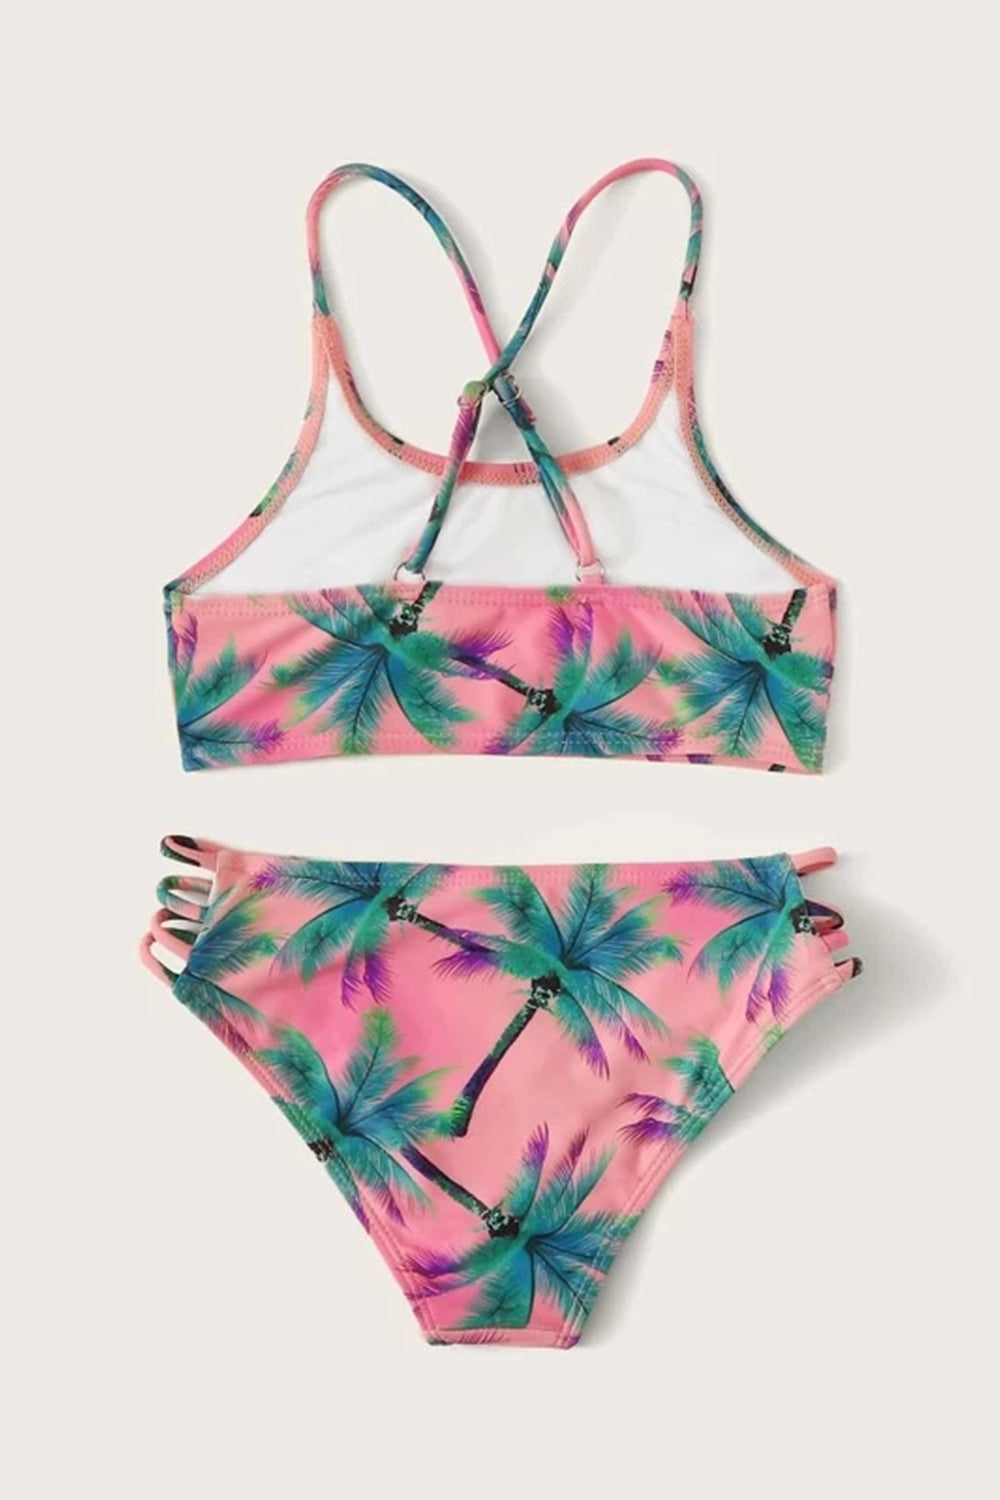 Girls Palm Tree Print Criss Cross Bikini Set